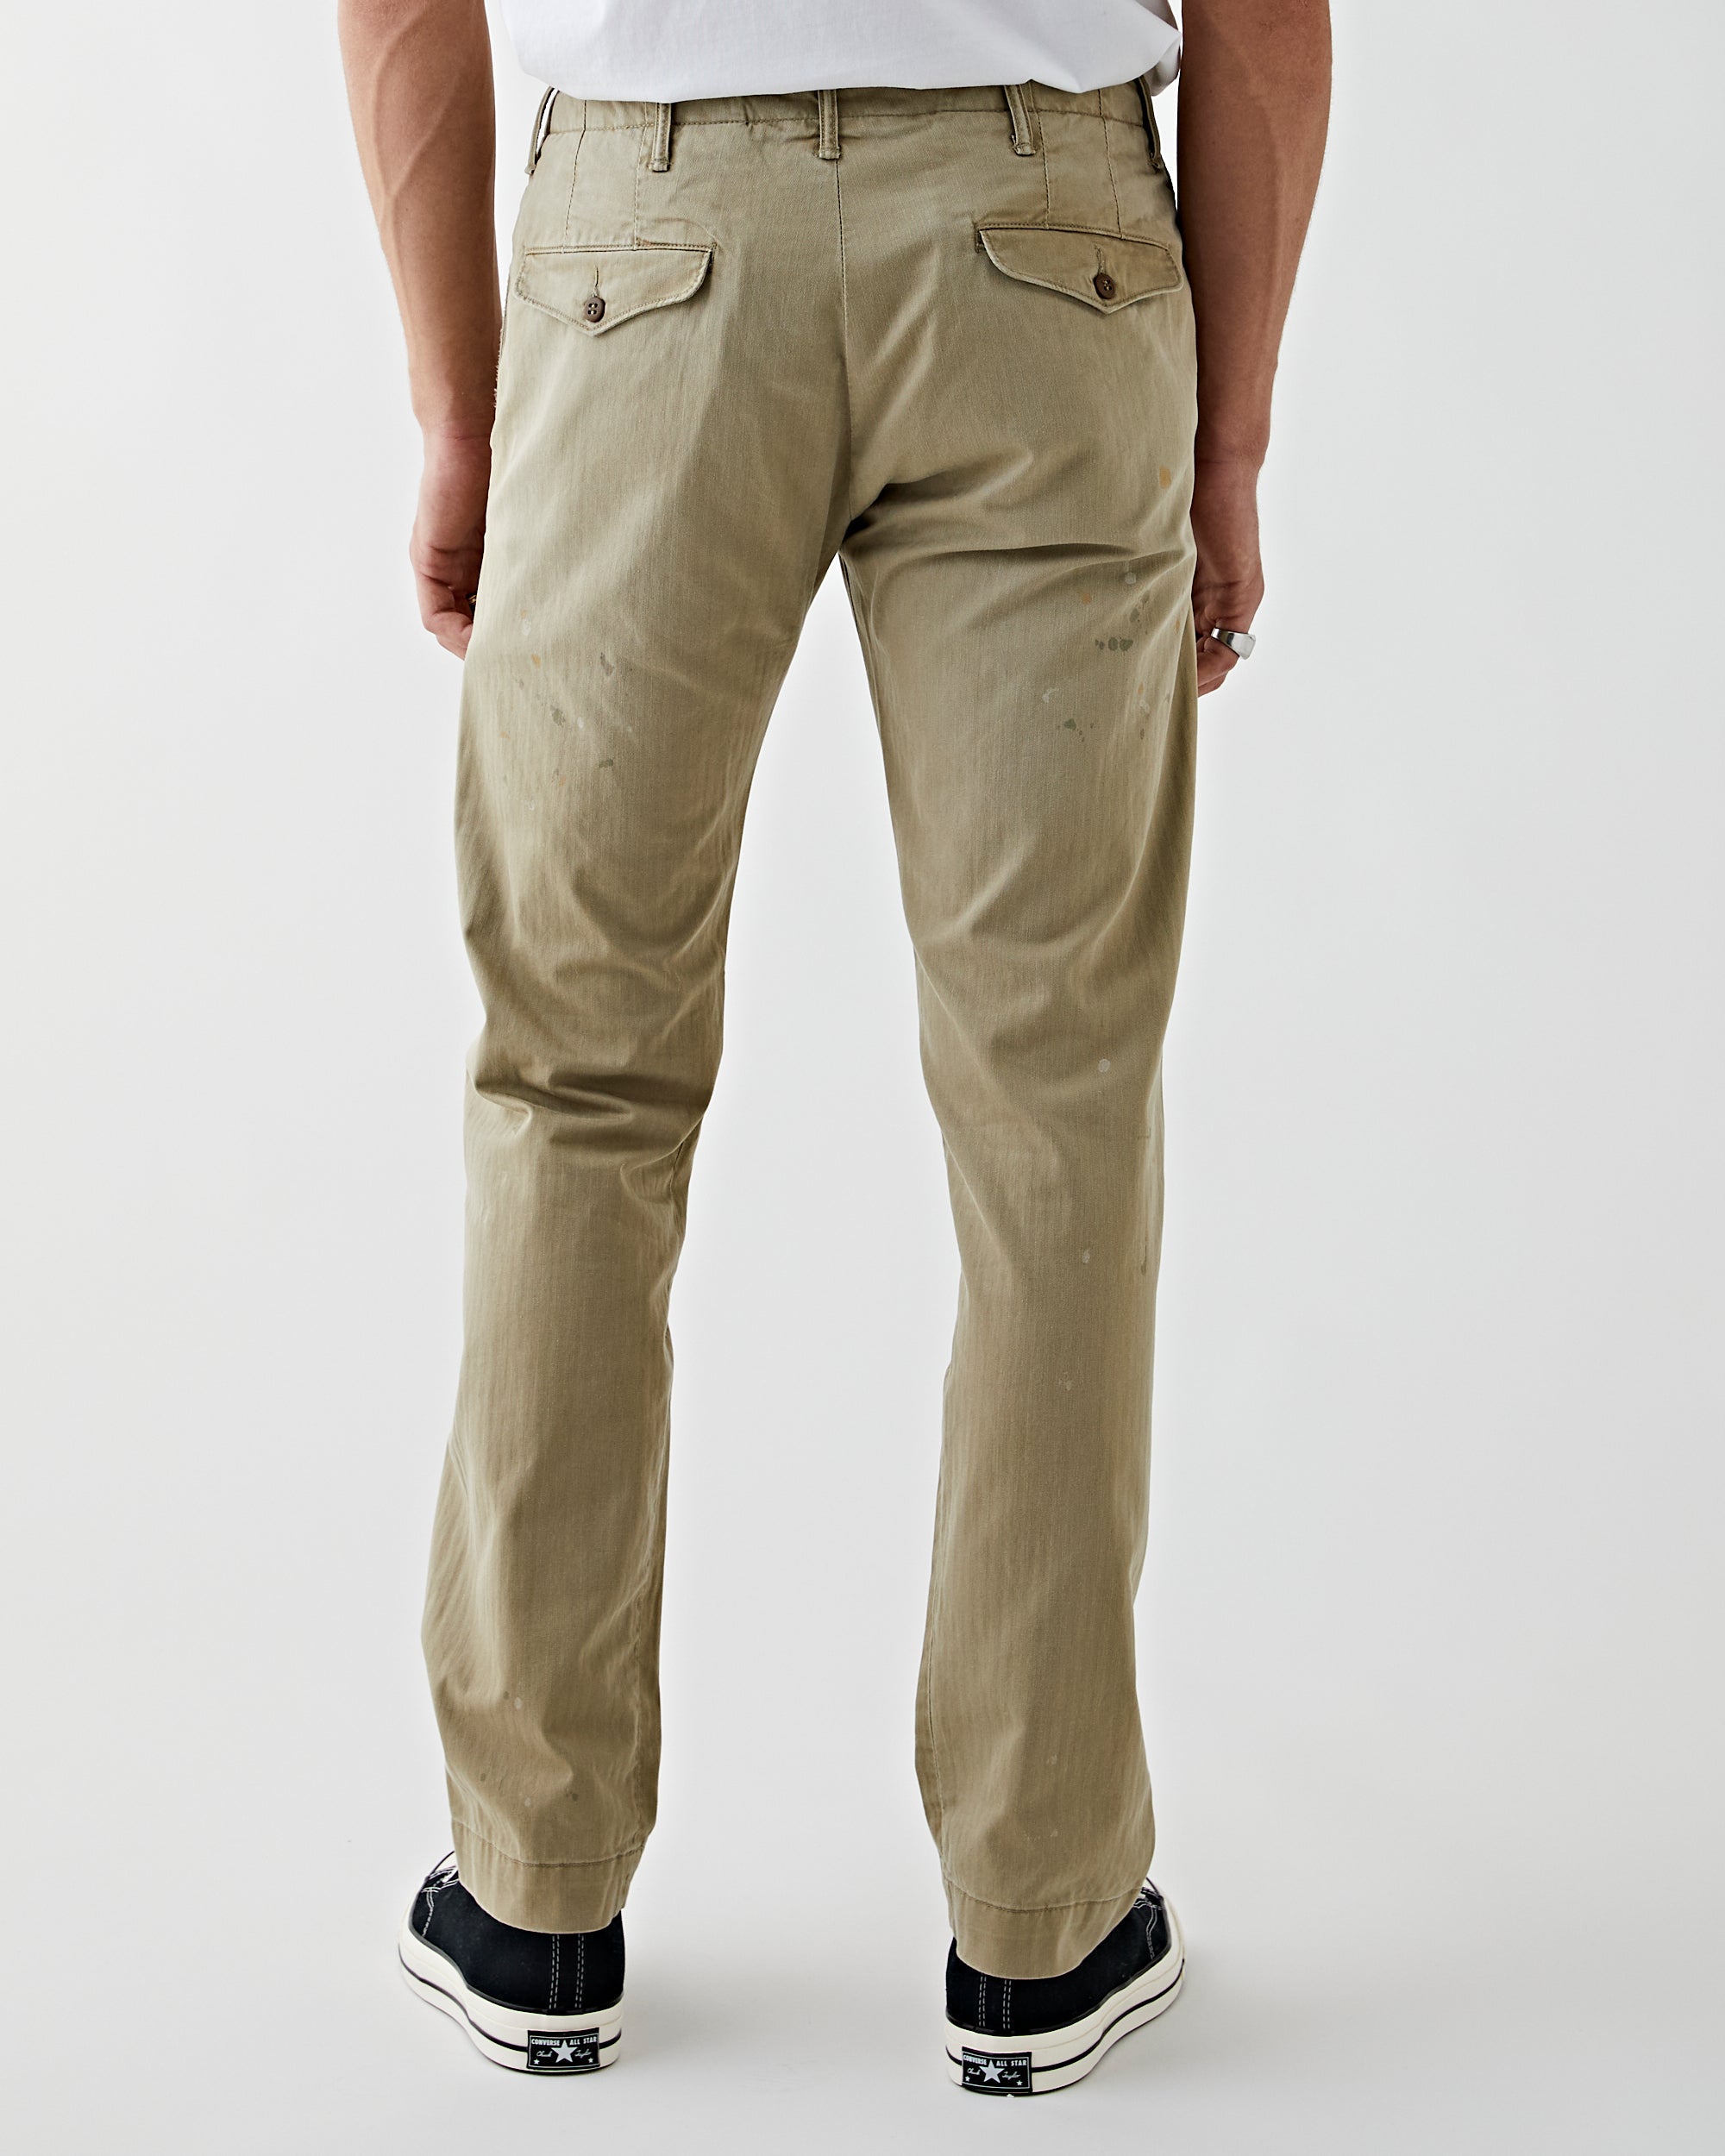 RRL Officer's Flat Chino Vintage Khaki Pants Men